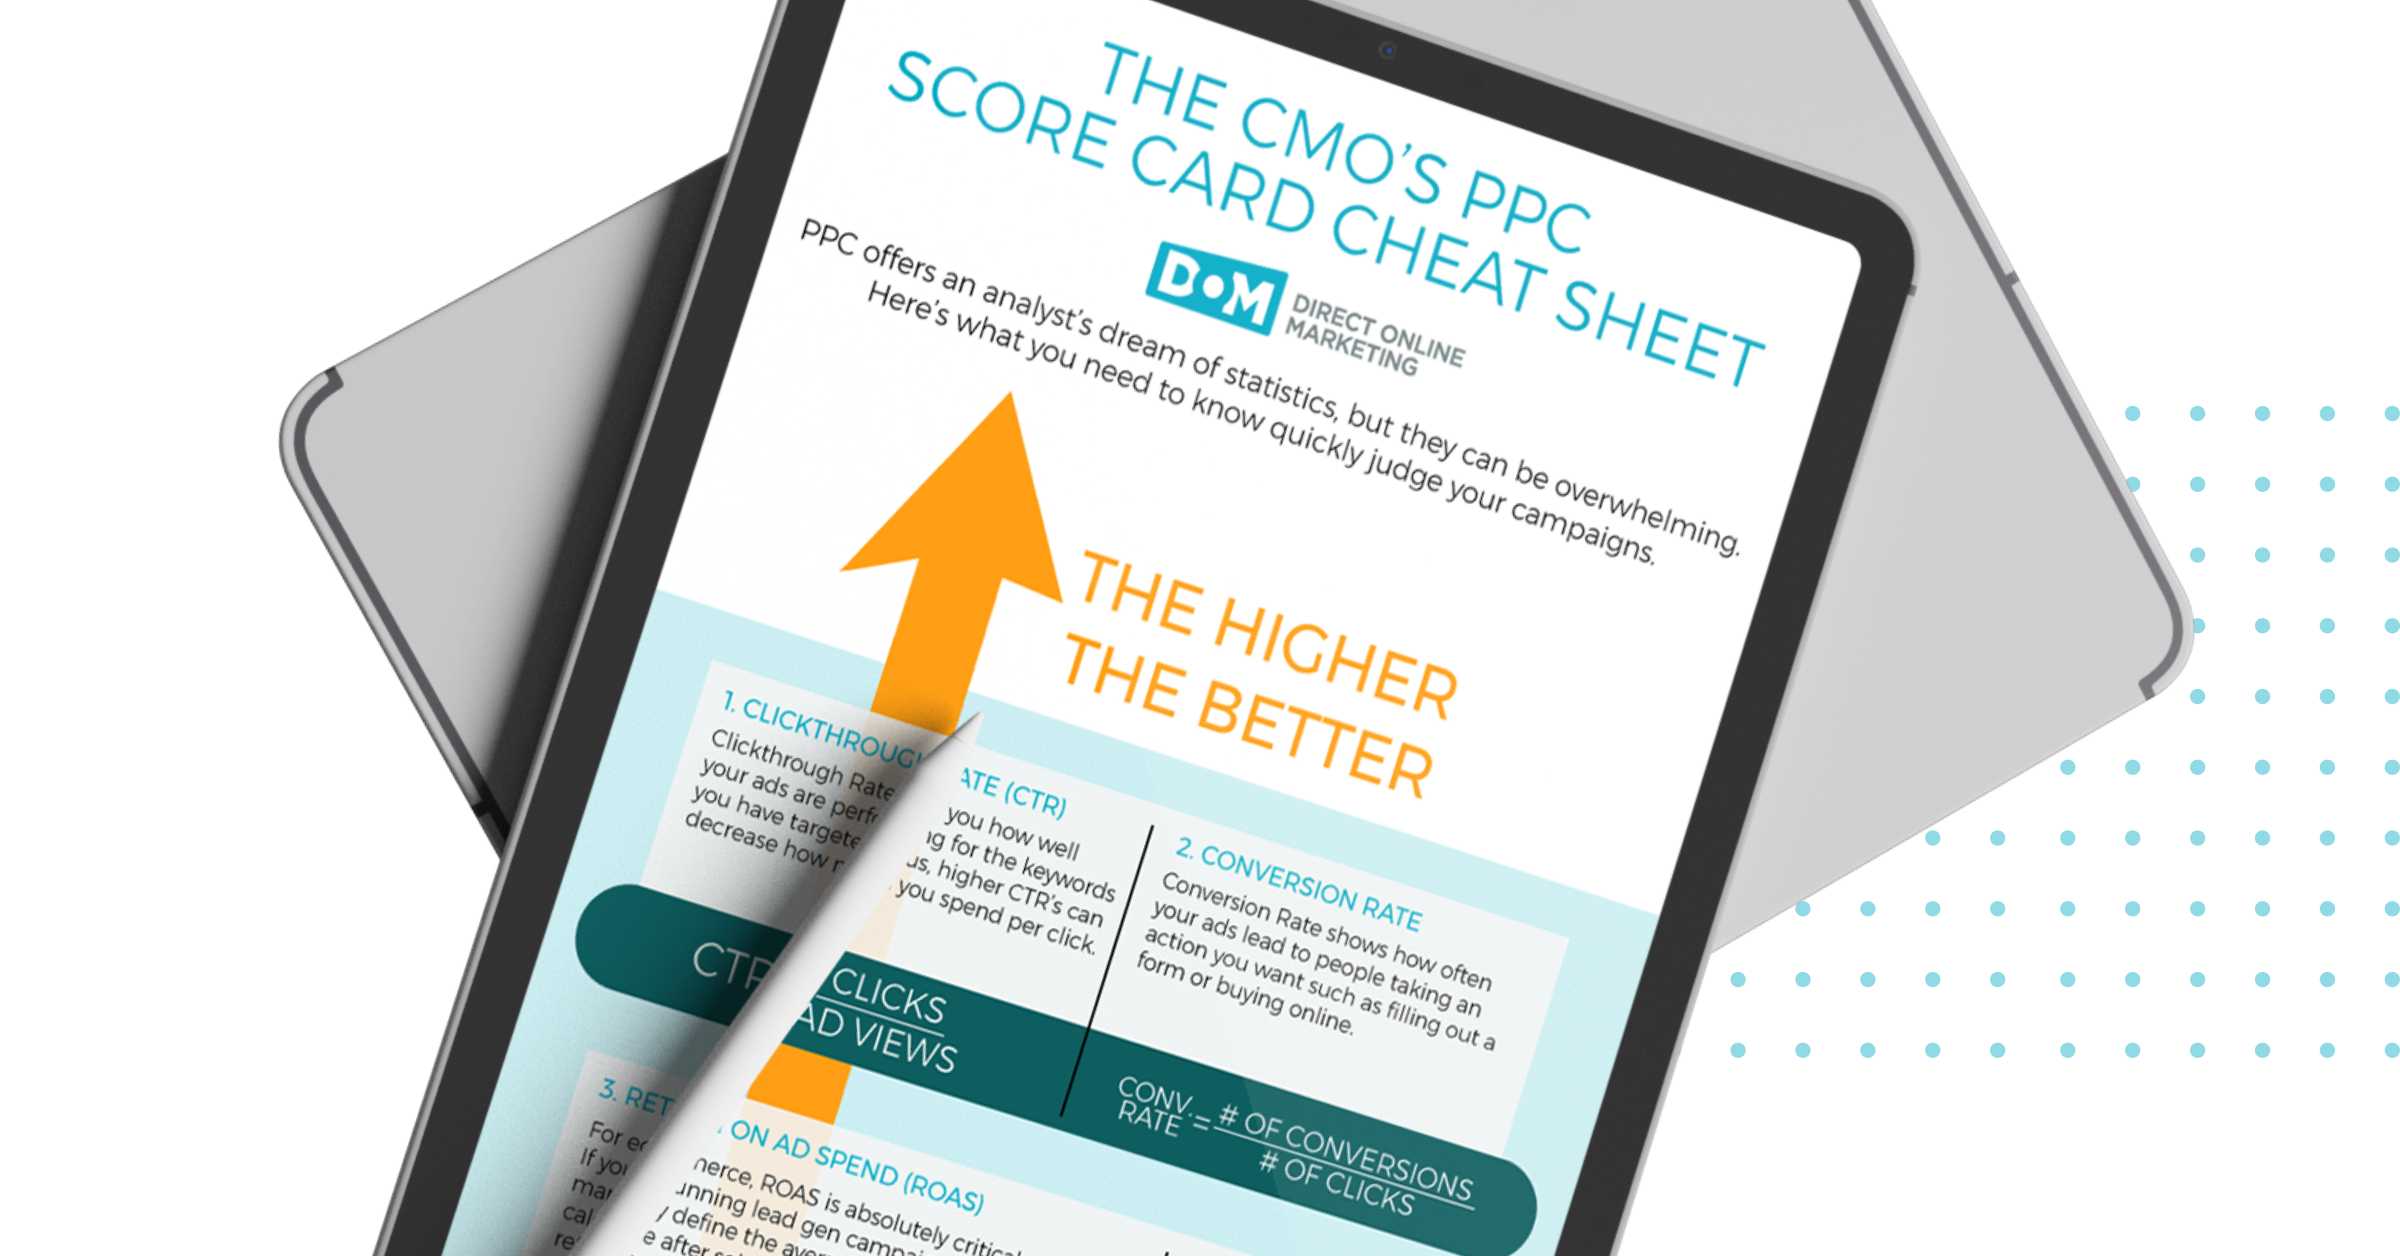 CMO PPC Scorecard Cheat Sheet